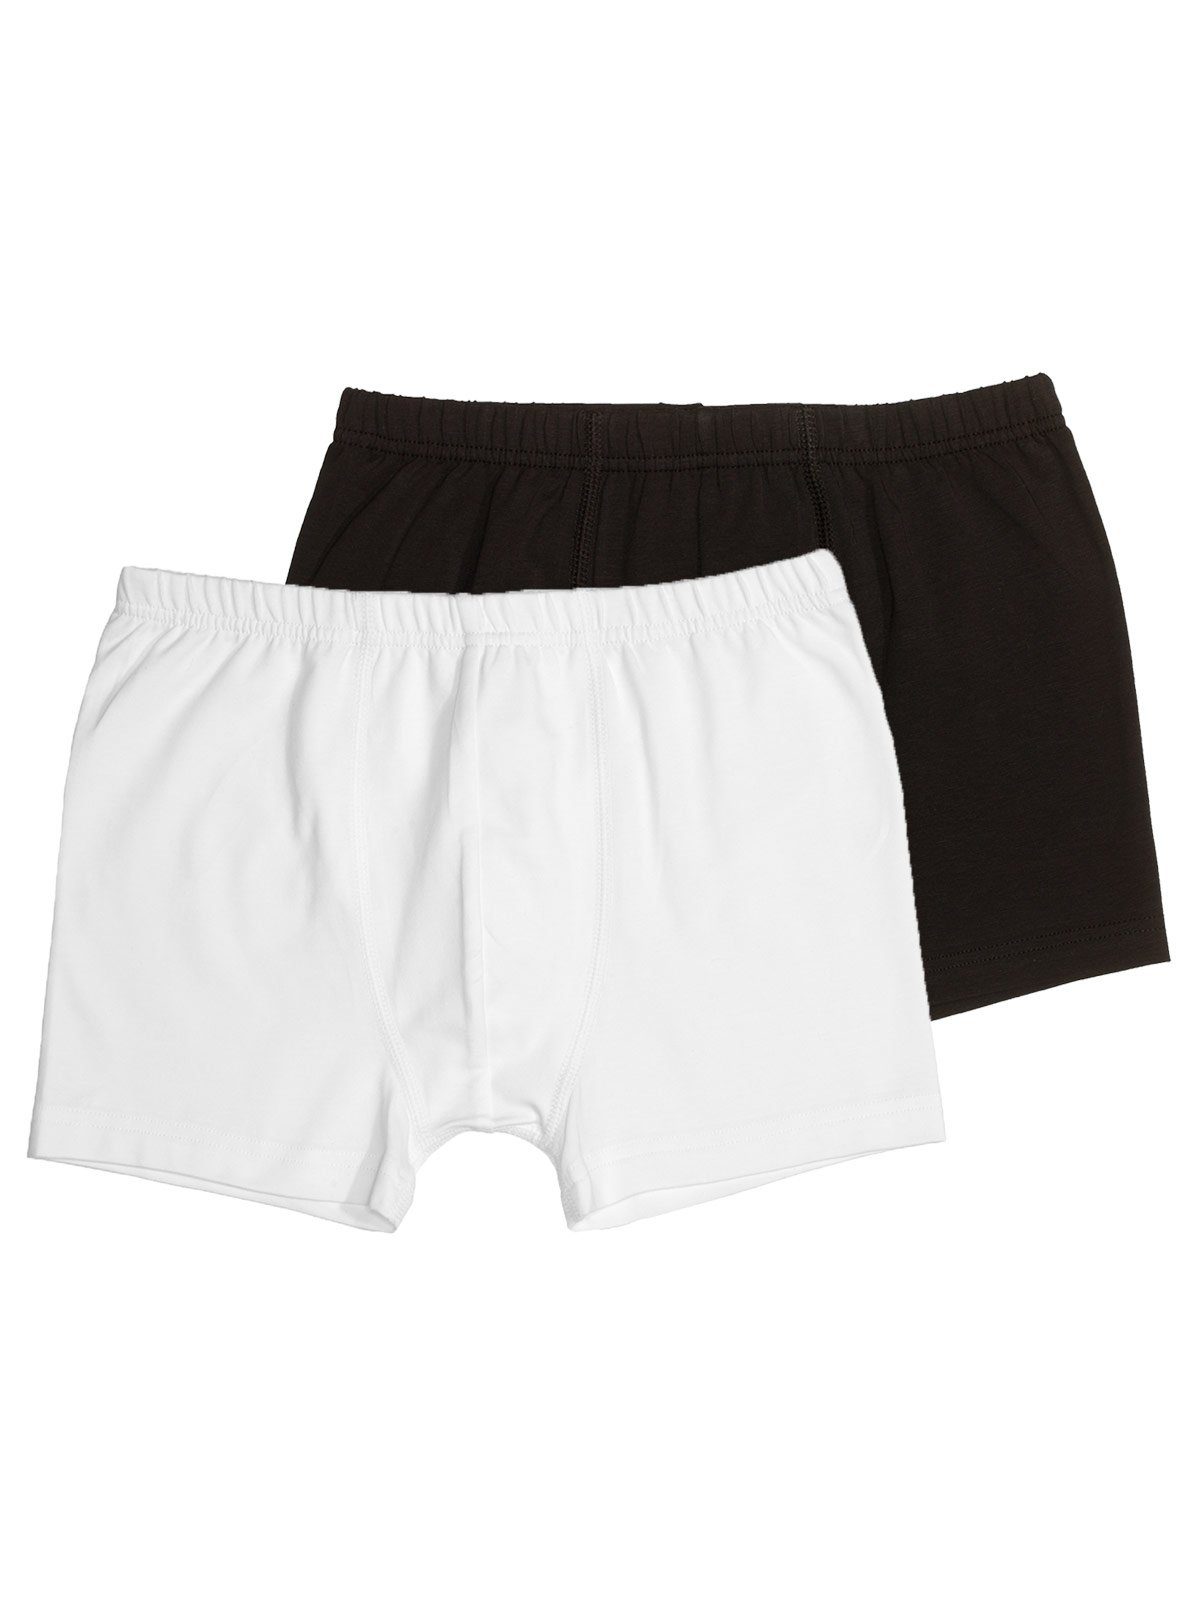 Sweety for Kids Boxershorts 2er Sparpack Knaben Retro Shorts Single Jersey (Spar-Set, 2-St) hohe Markenqualität schwarz weiss